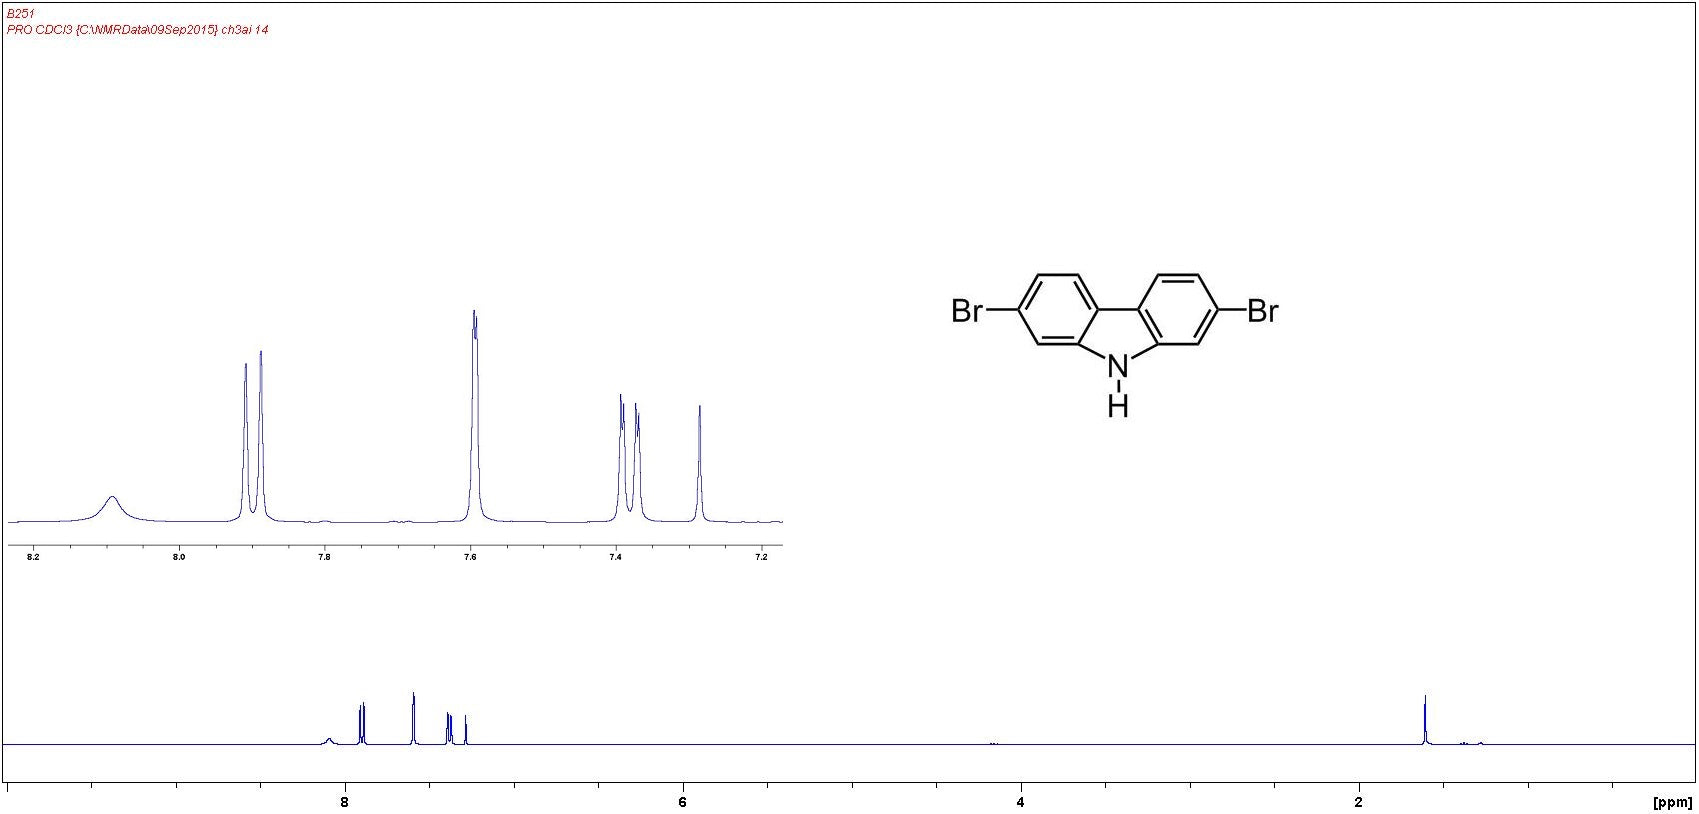 1H NMR of 2-7-dibromocarbazole in CDCl3